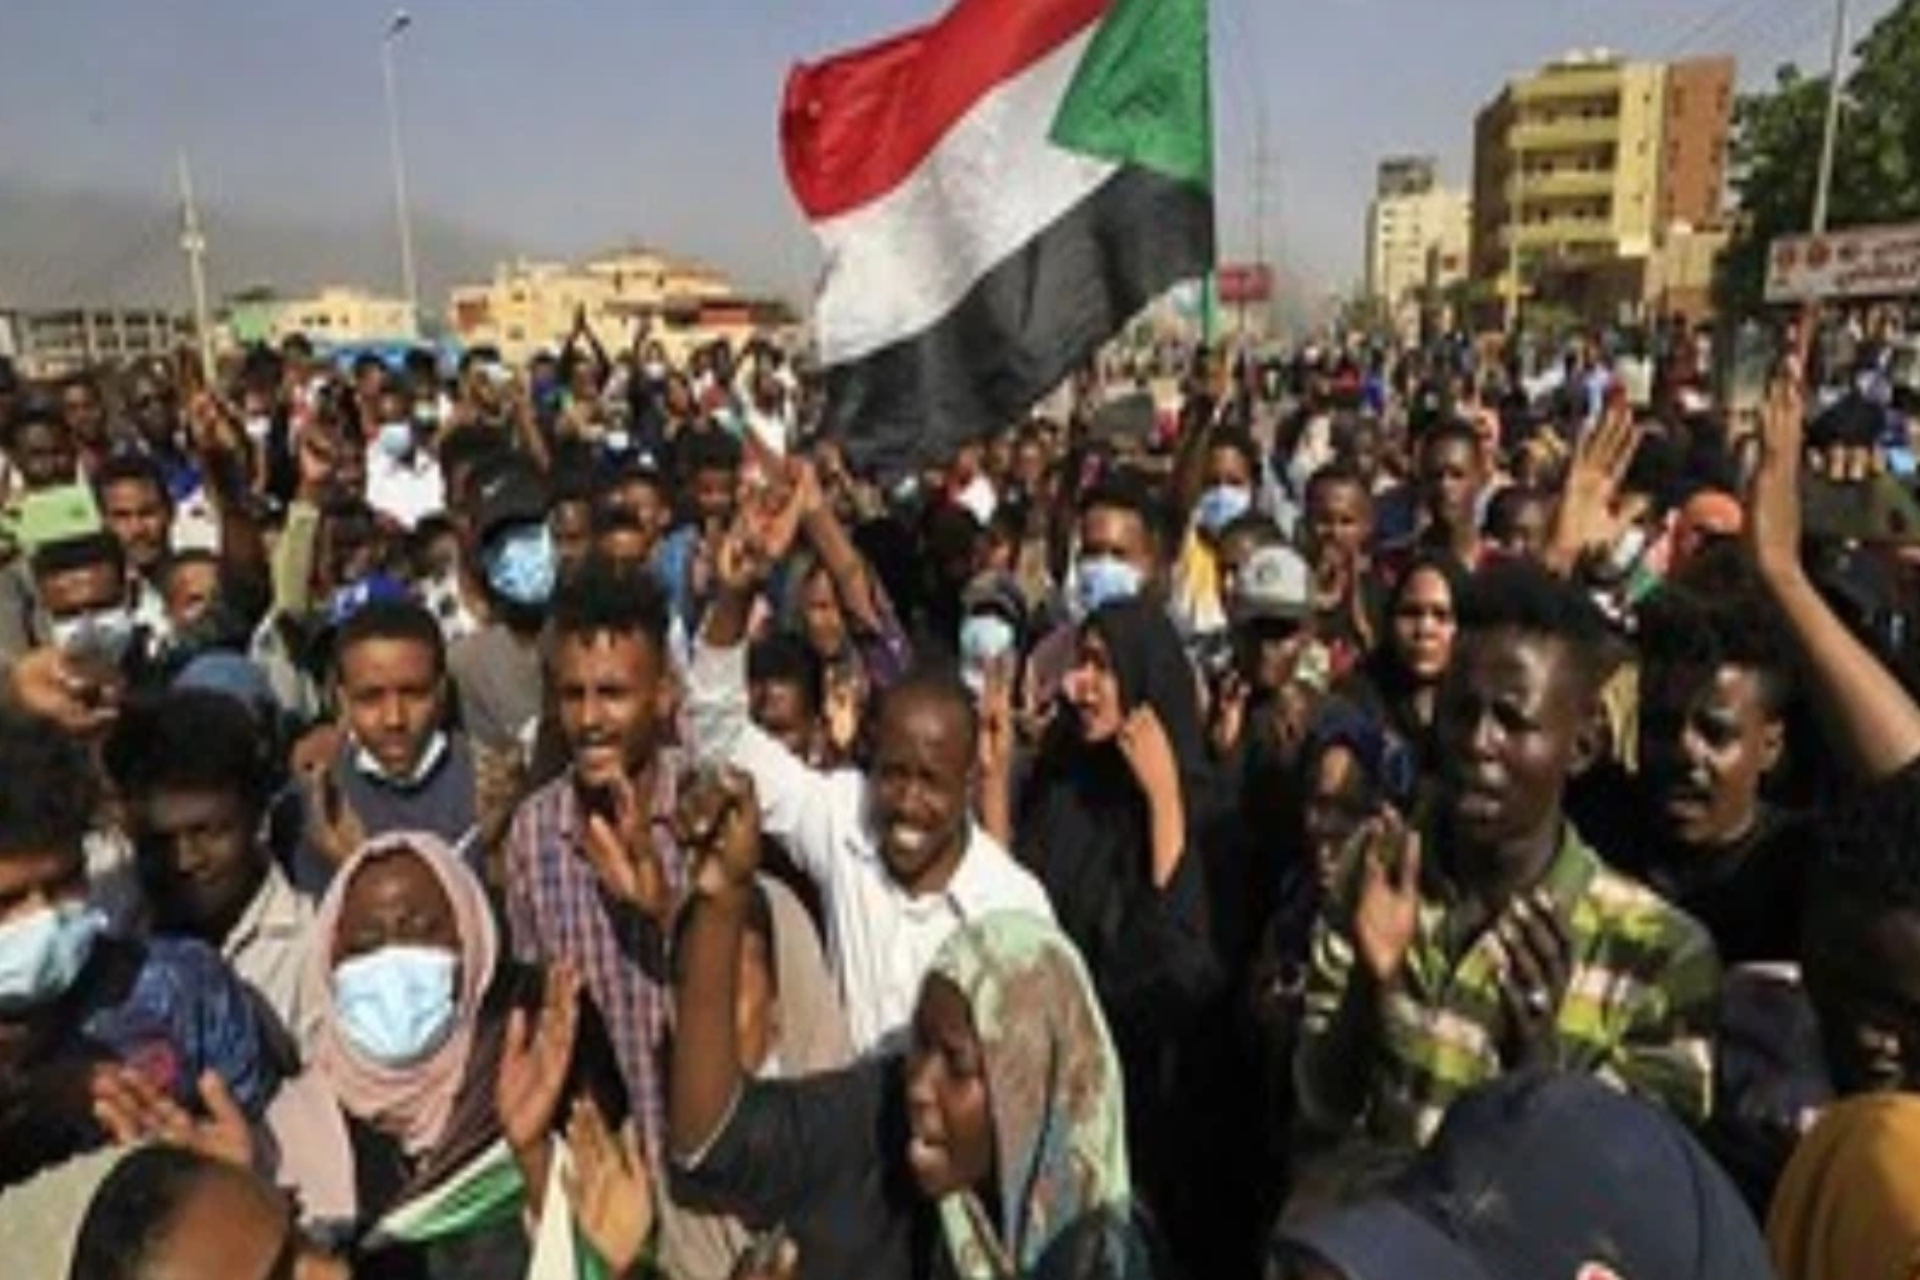 Khartoum paramilitaries